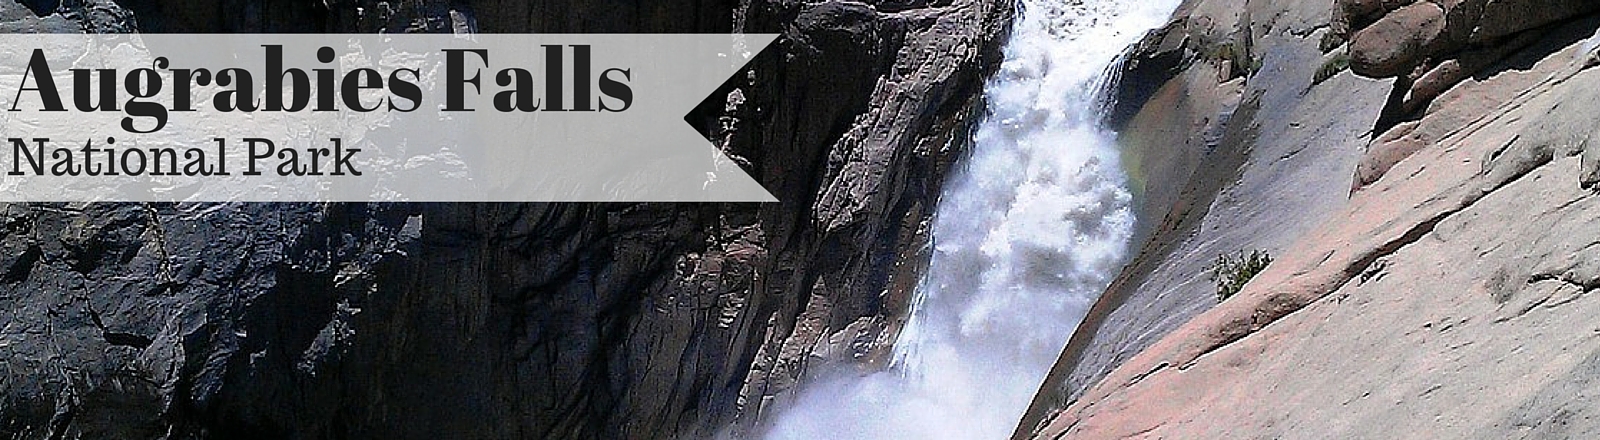 Augrabies Falls National Park | National Parks Guy